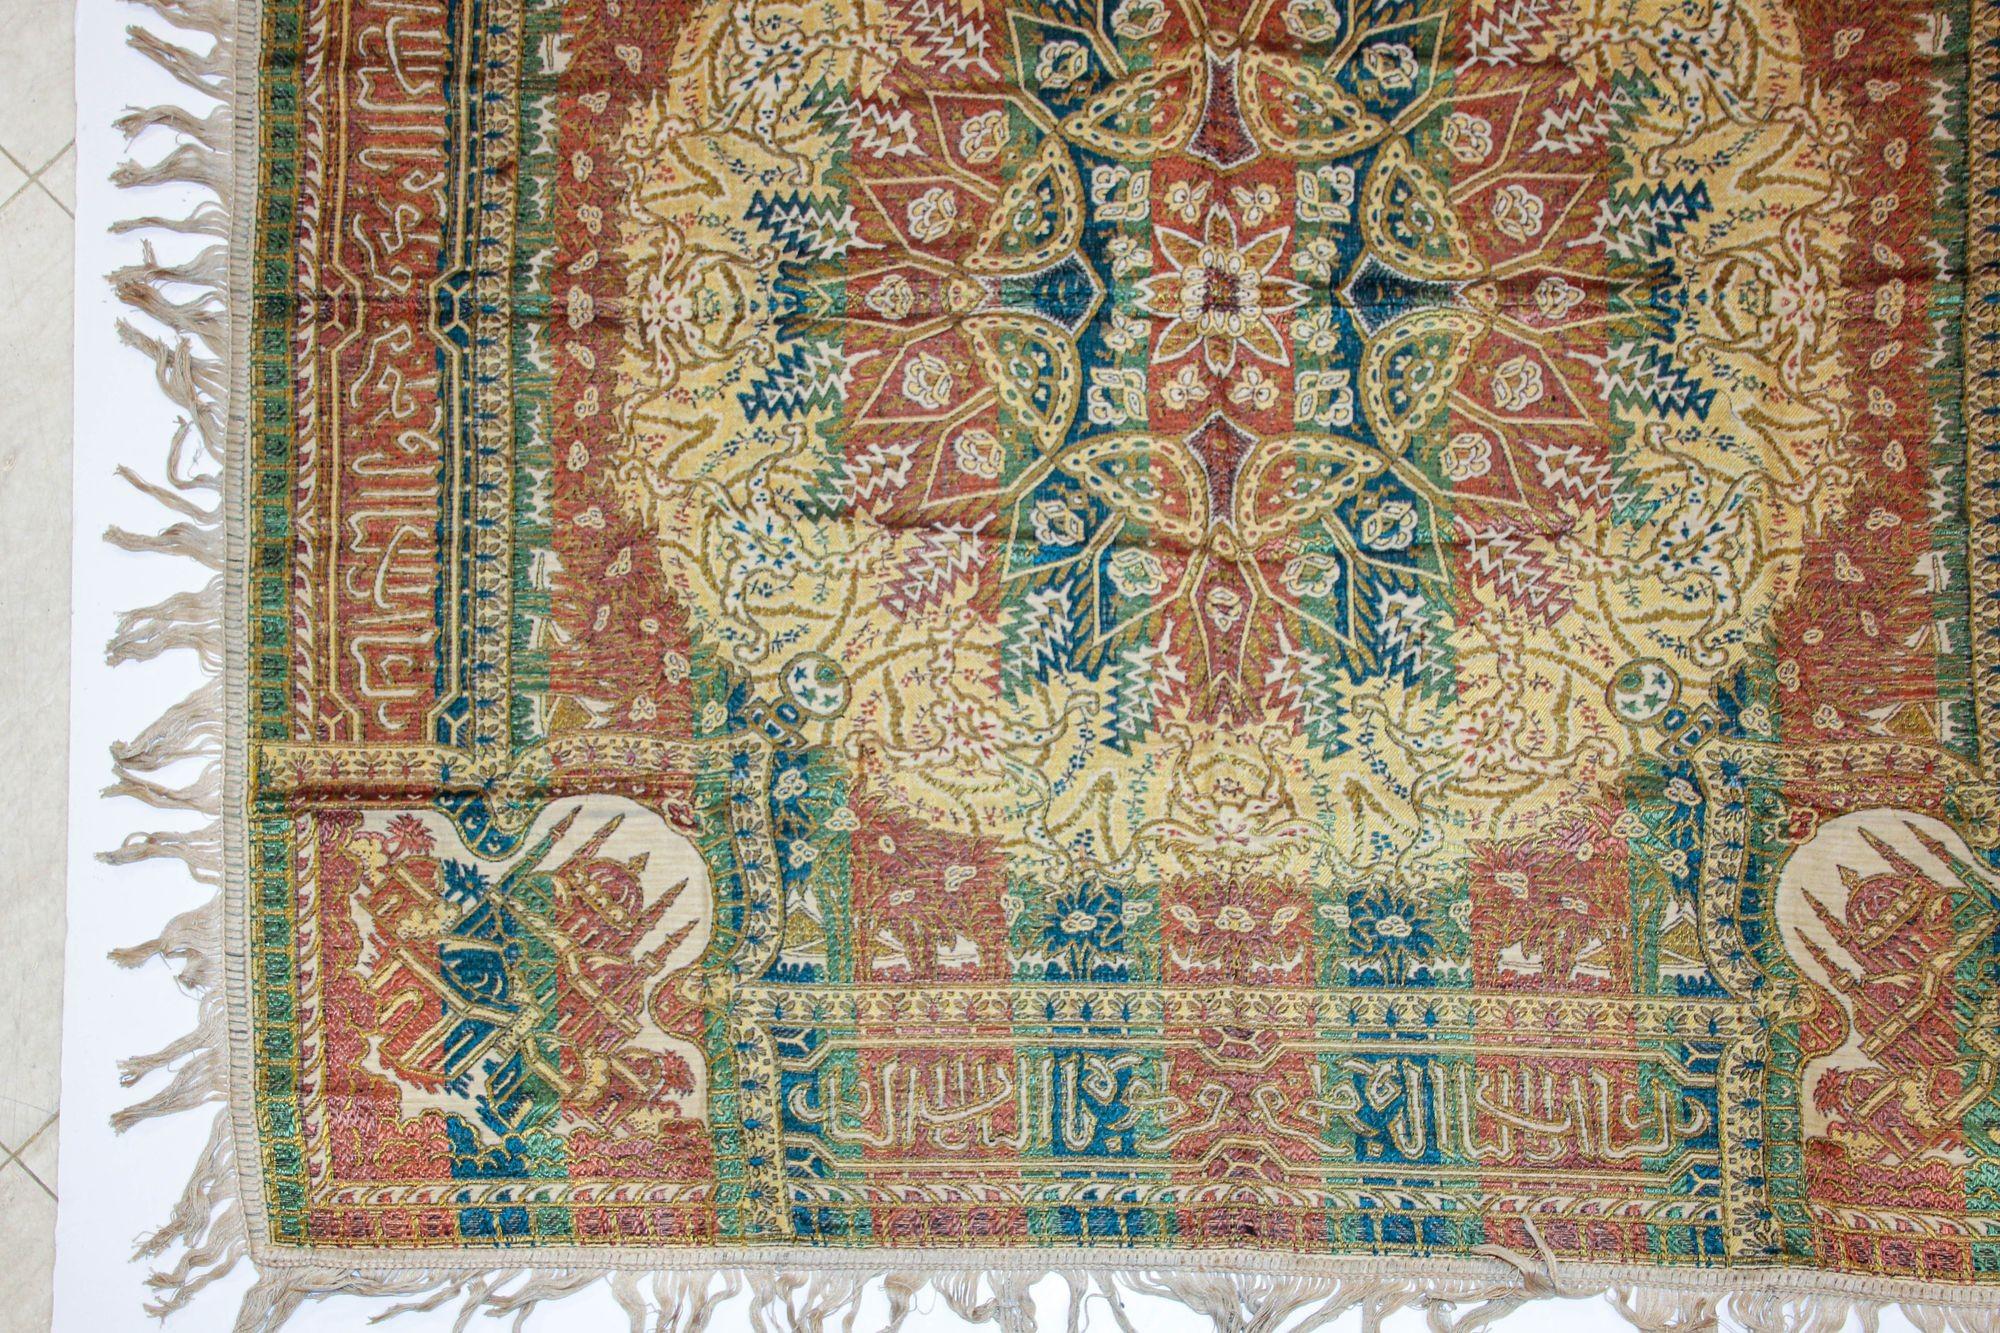 Moorish 1940s Granada Islamic Spain Textile with Arabic Calligraphy Writing For Sale